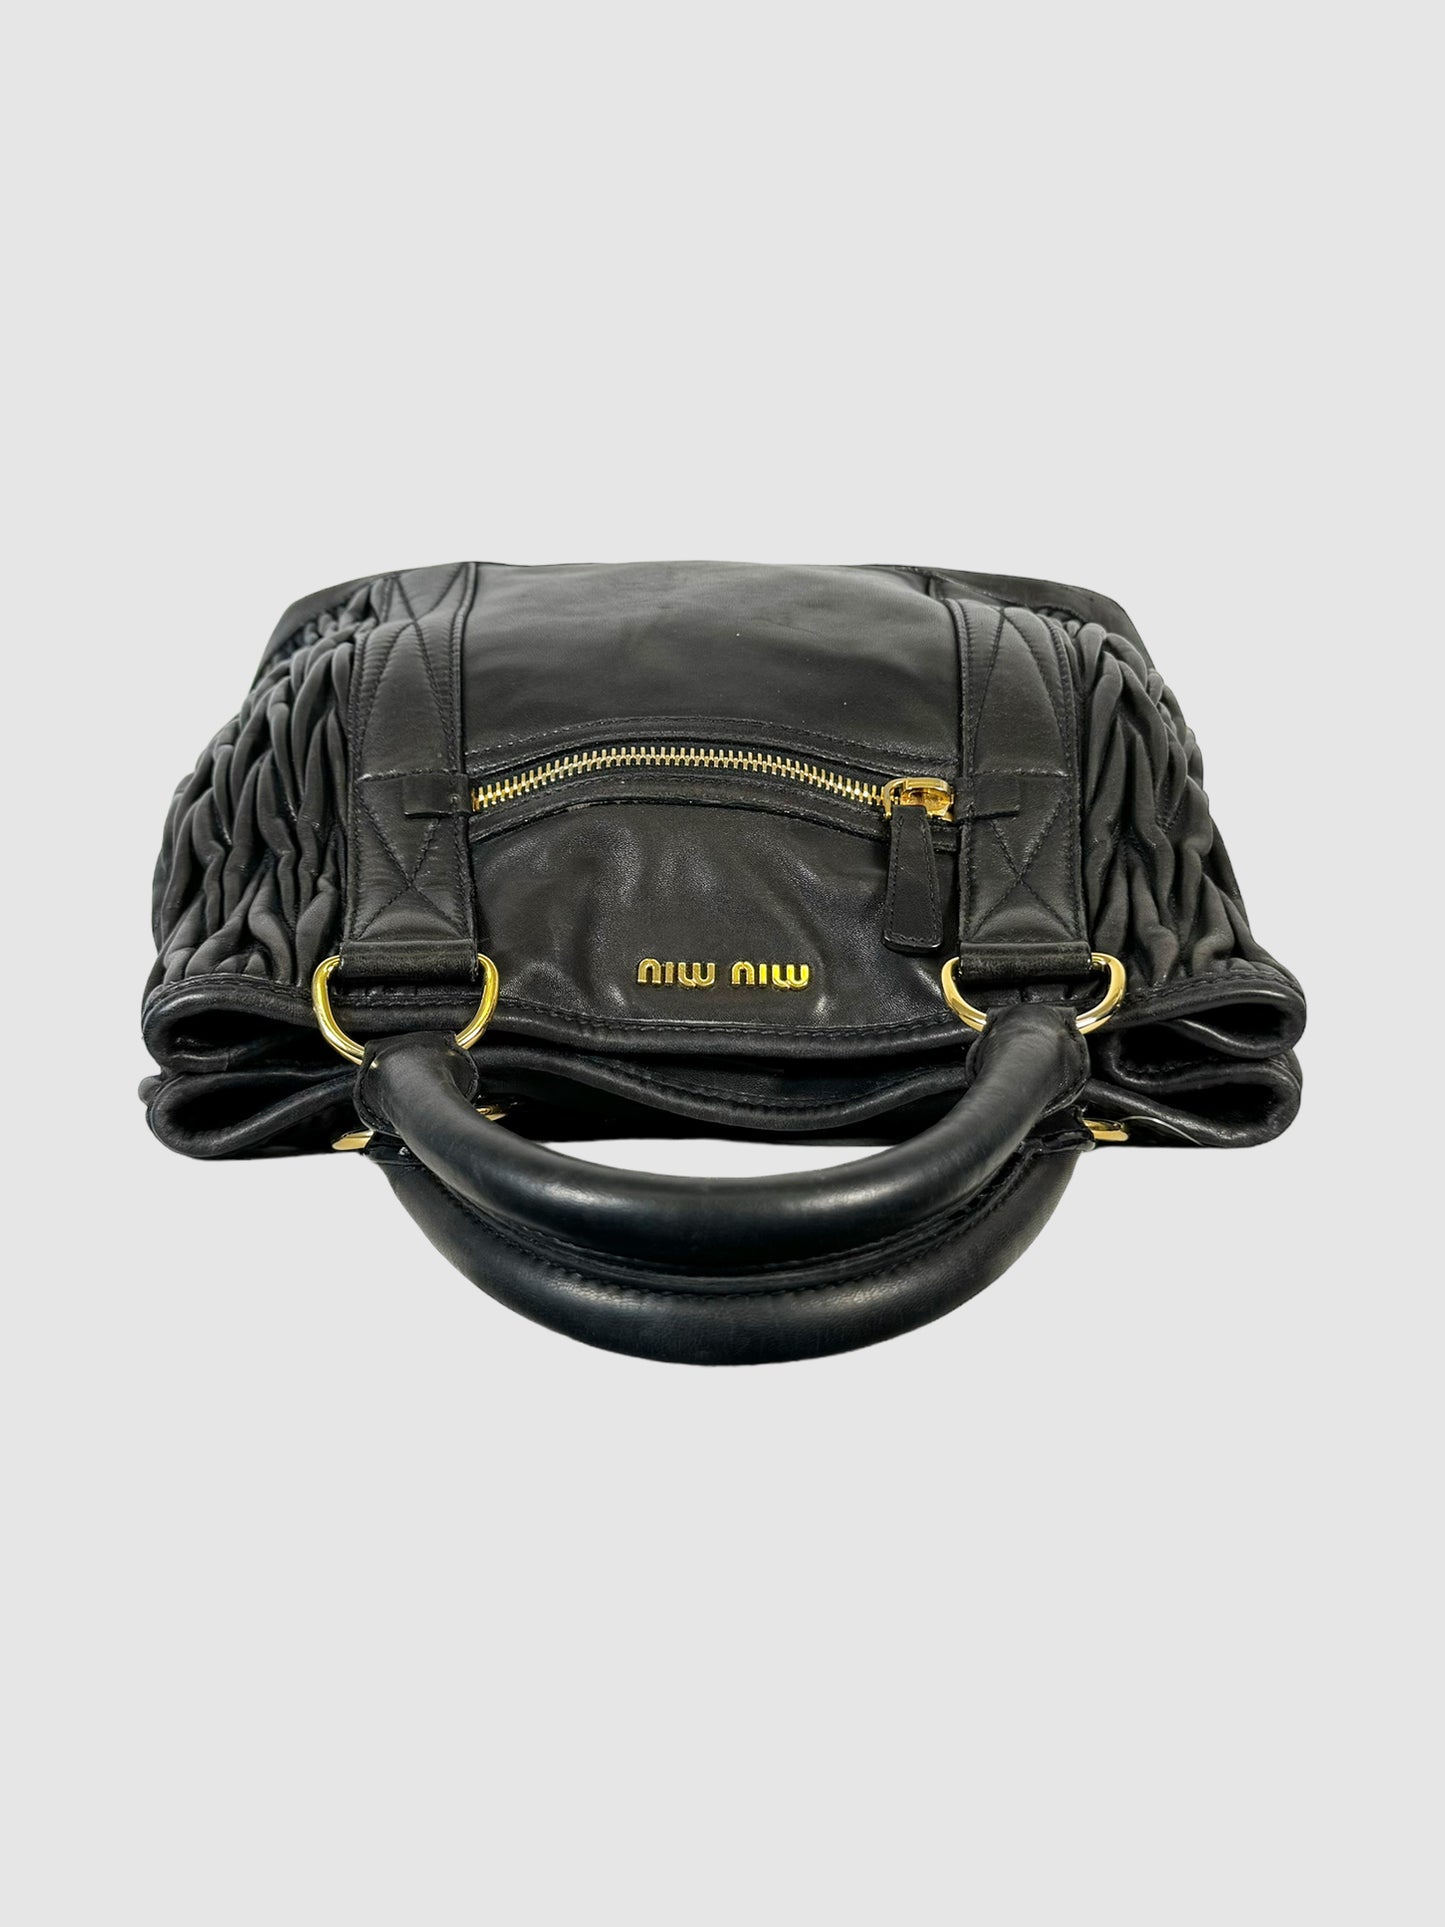 Matelassé Leather Handbag